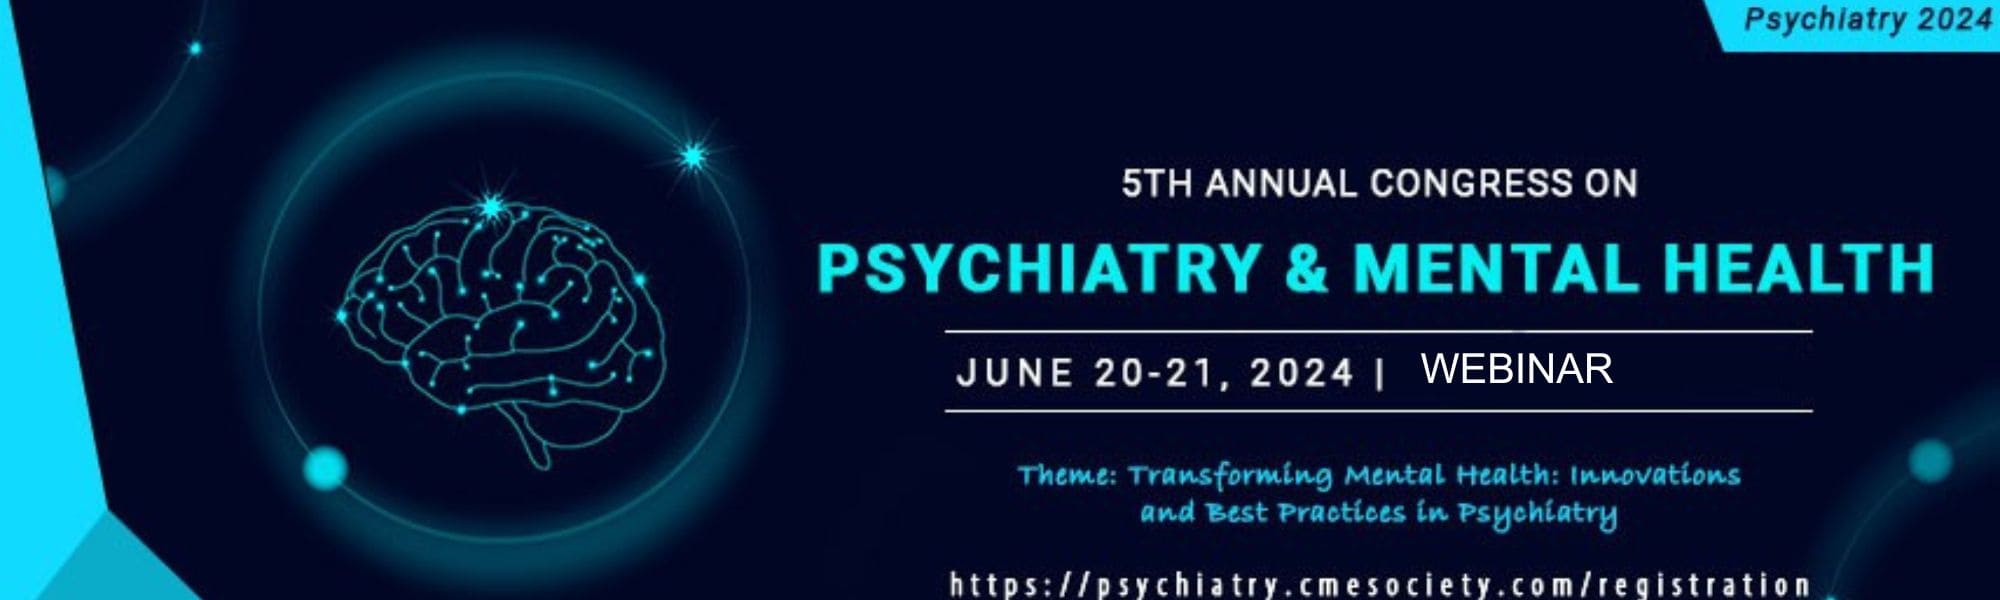 Psychiatry Conferences 2024 Mental Health Conferences Addiction